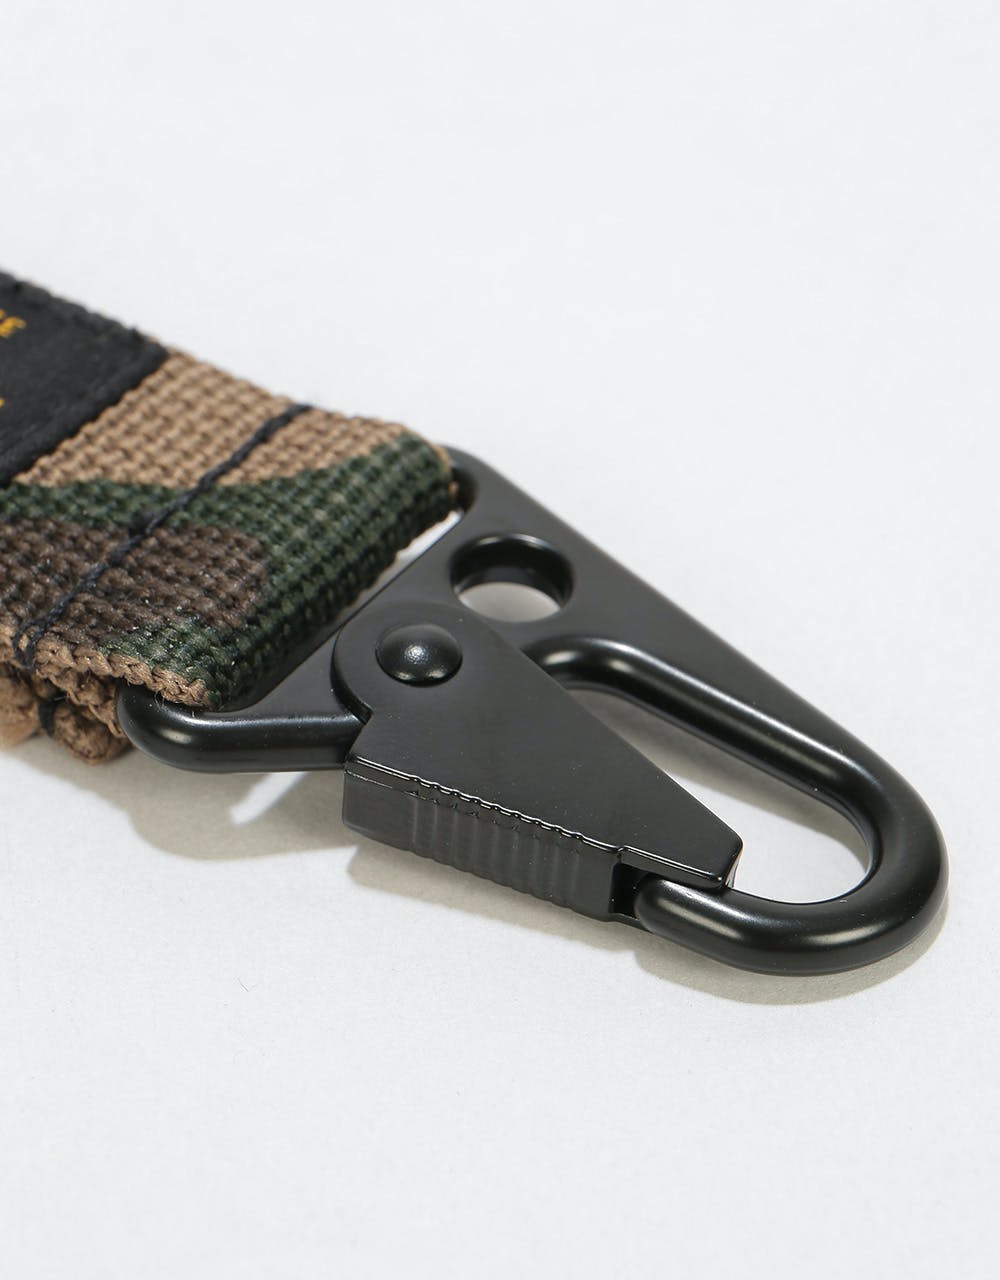 Carhartt WIP Military Key Chain - Camo Laurel